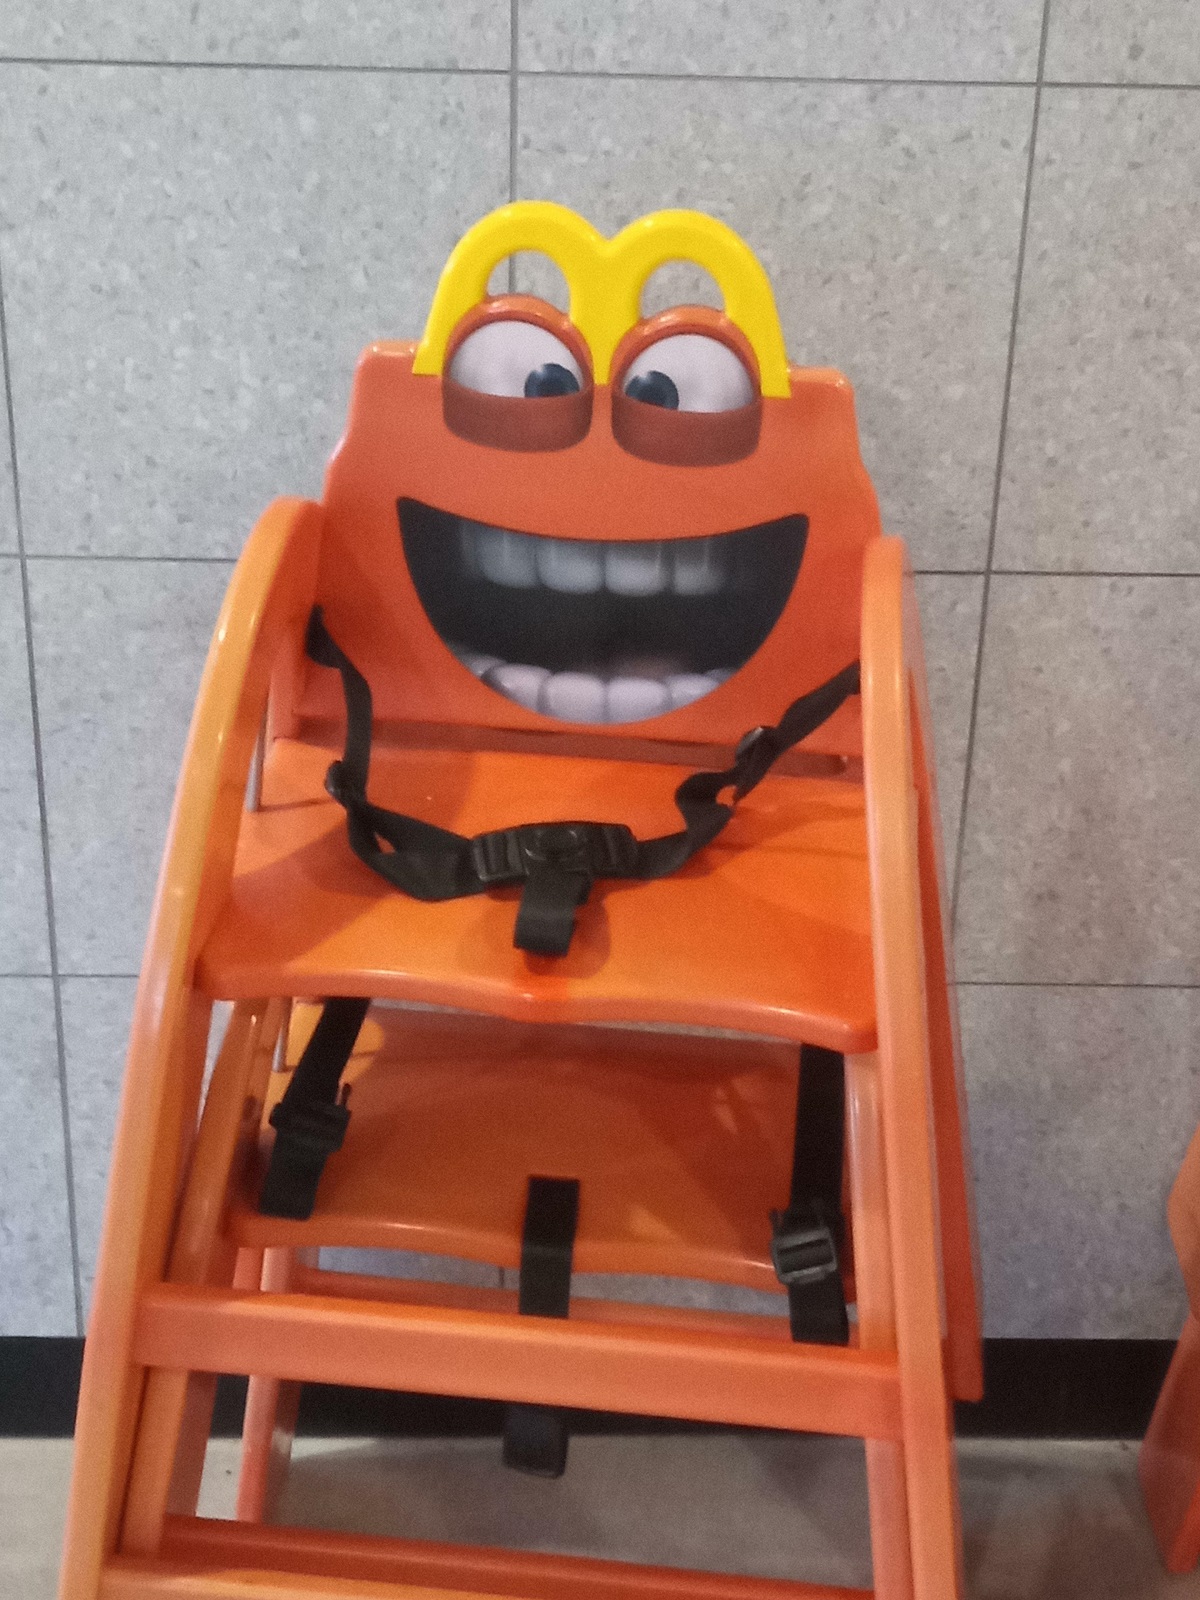 This Baby Seat At McDonald's